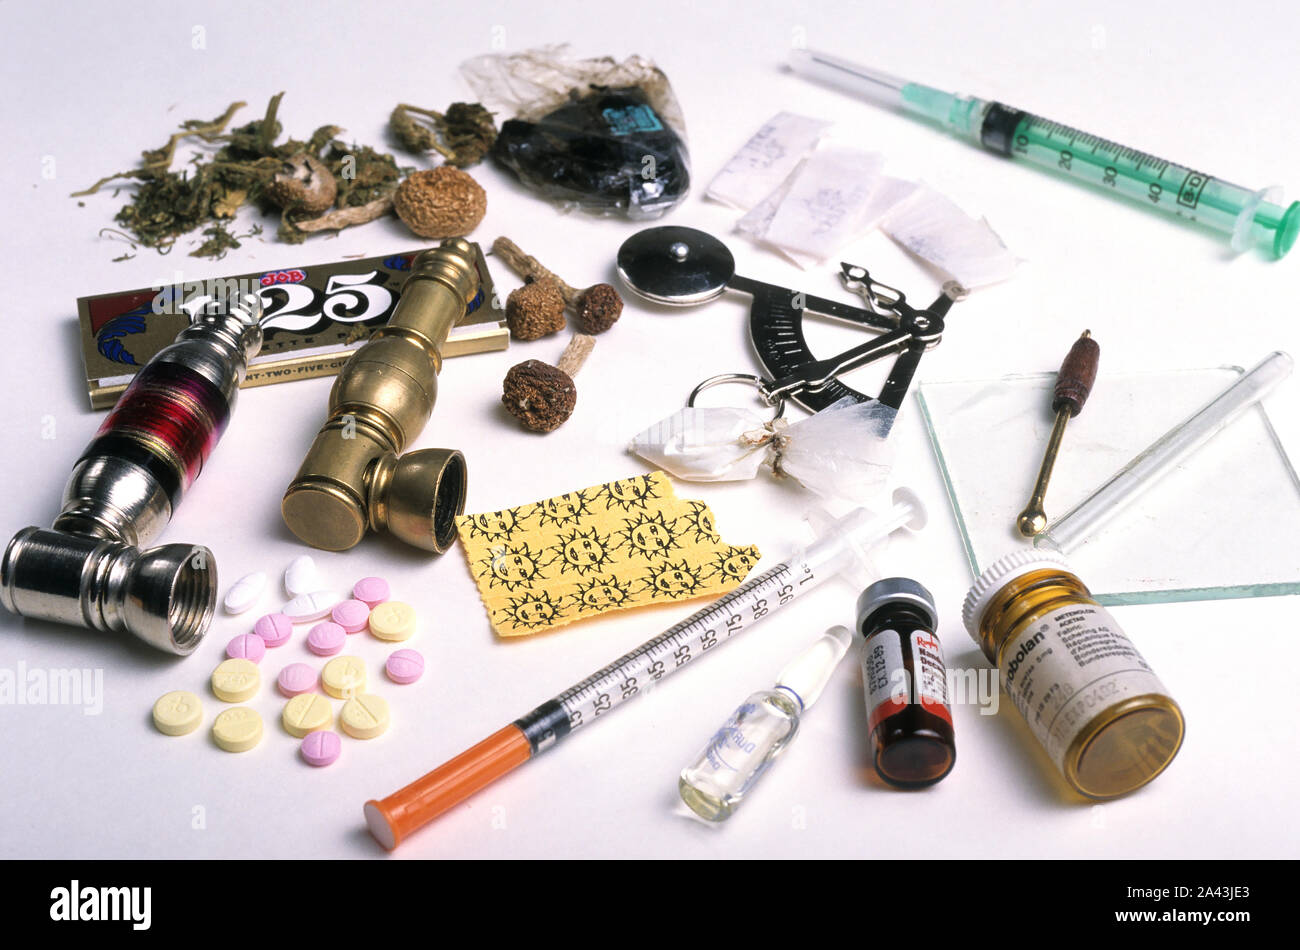 Illicit drugs and paraphernalia on display Stock Photo